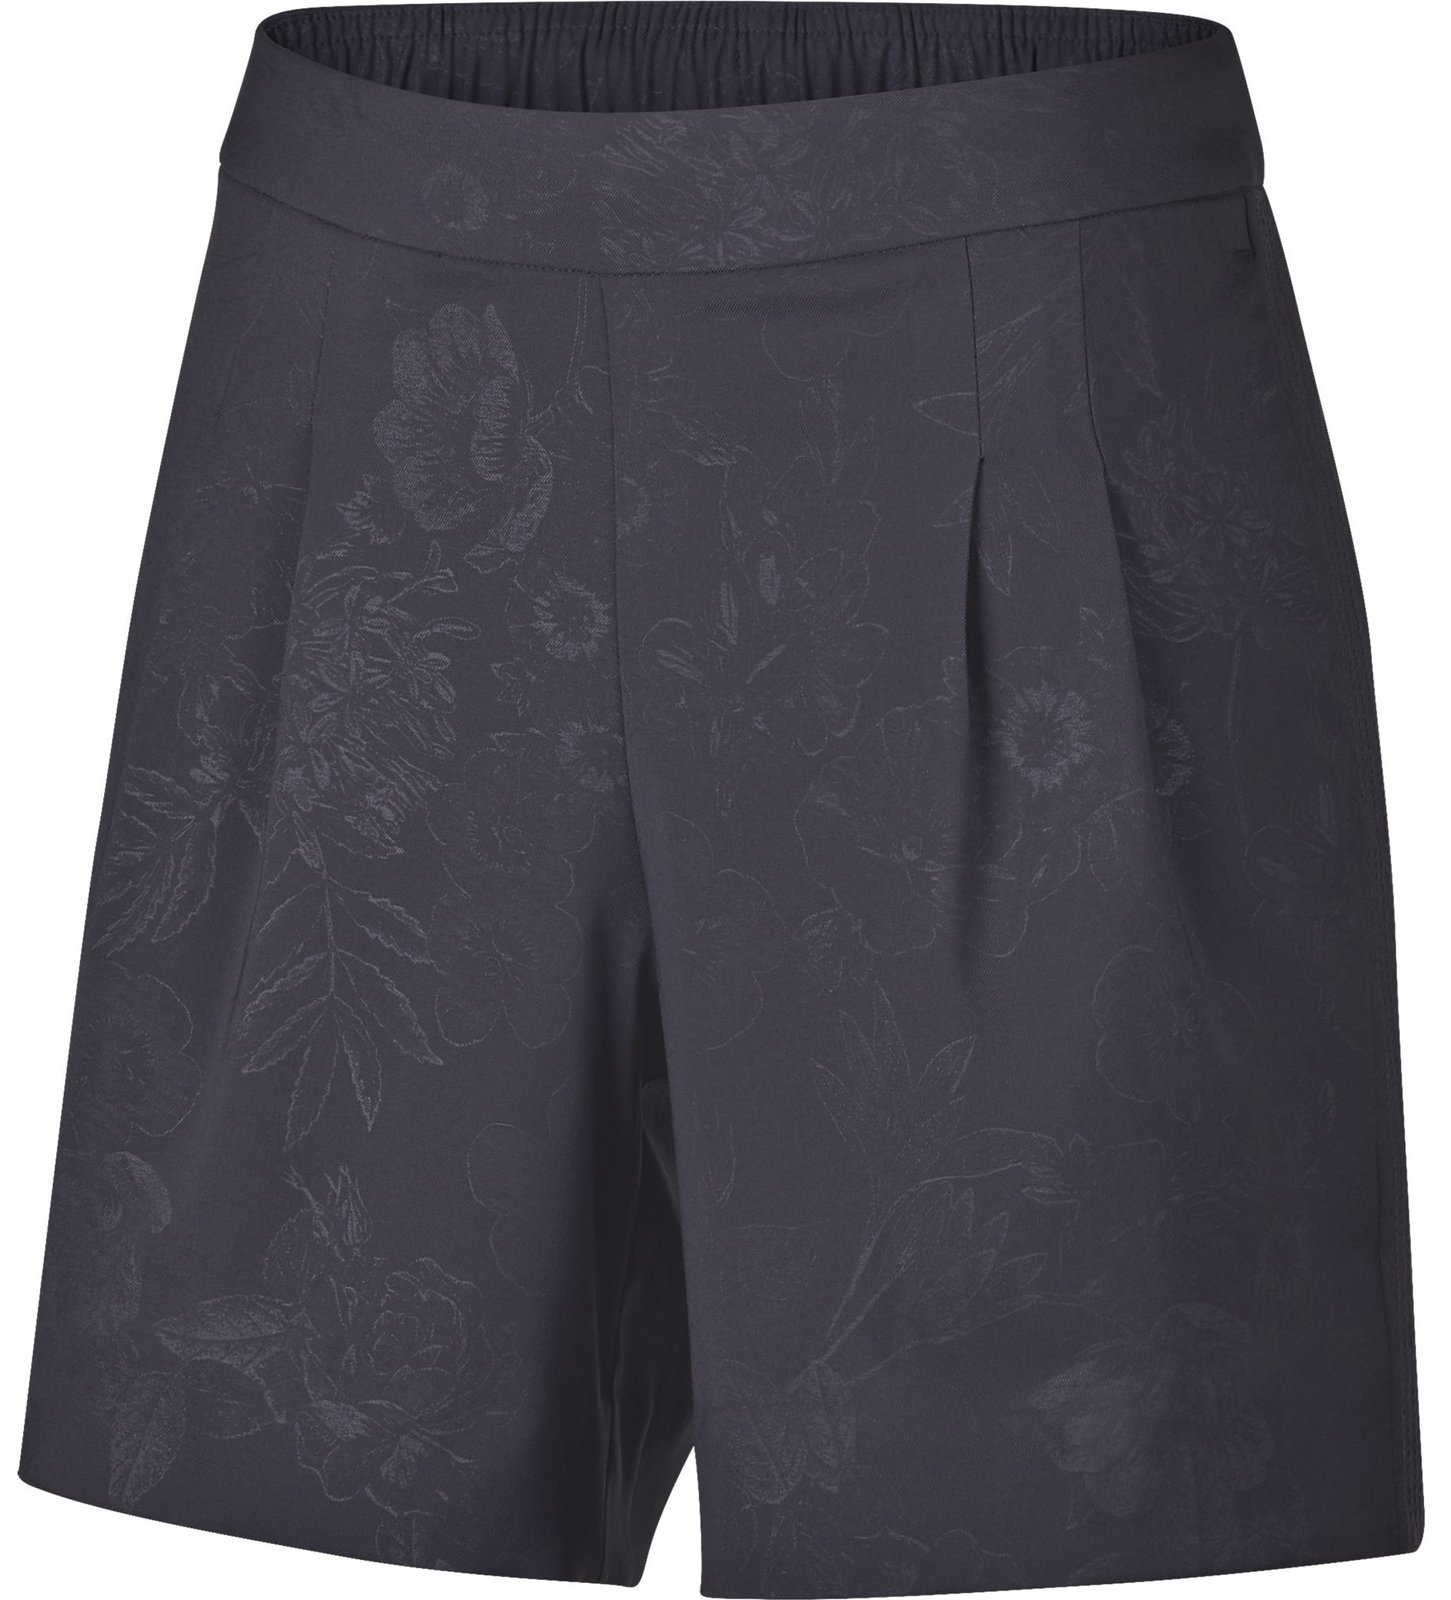 Pantalones cortos Nike Dri-Fit Floral Embossed Gridiron S Pantalones cortos